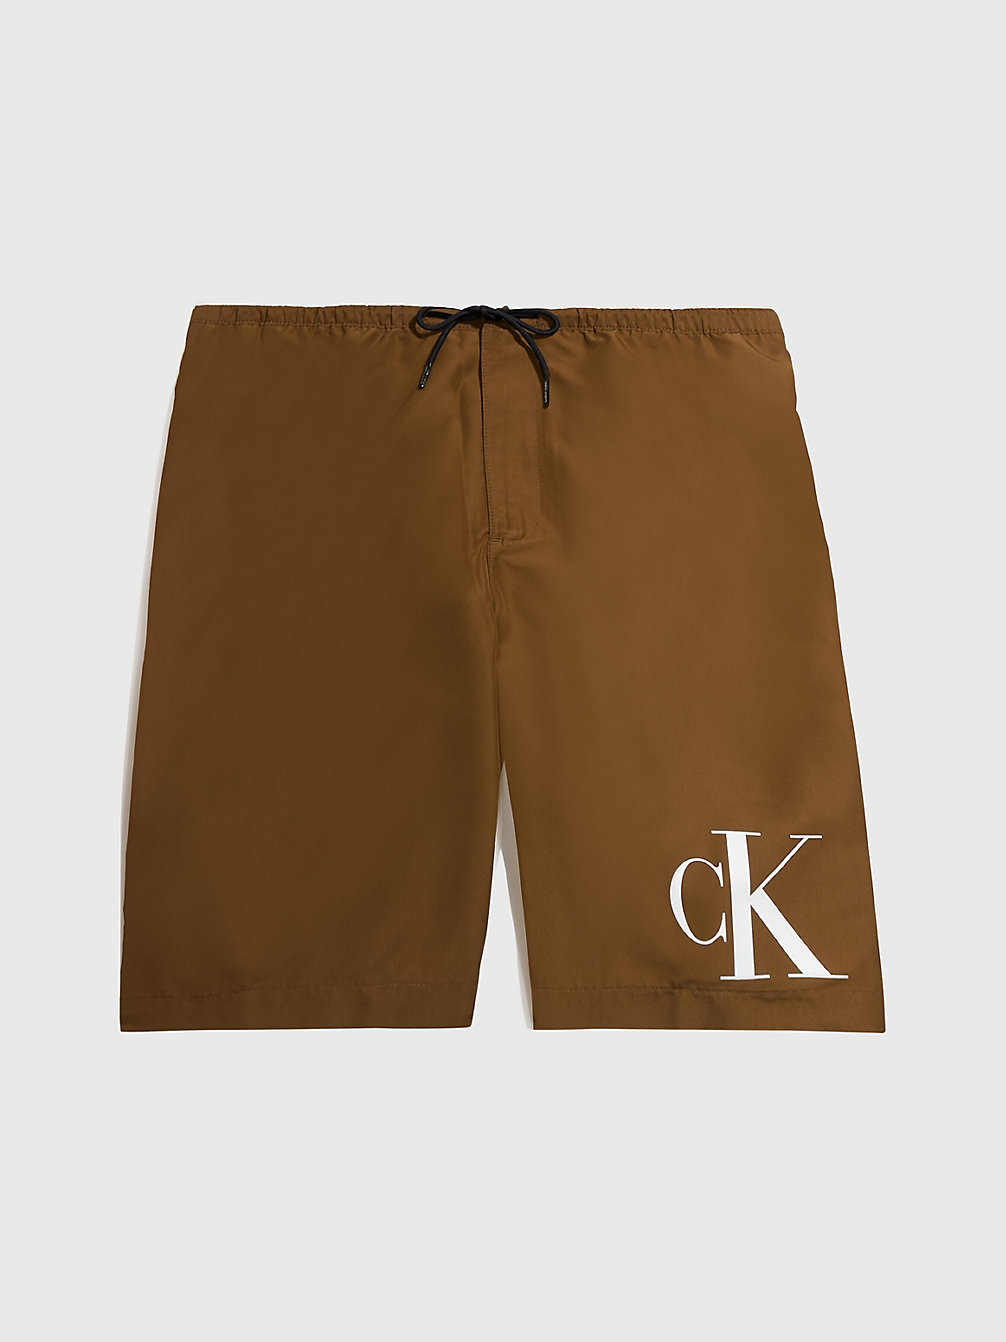 BROWN OLIVE Boardsshorts – CK Monogram undefined Herren Calvin Klein